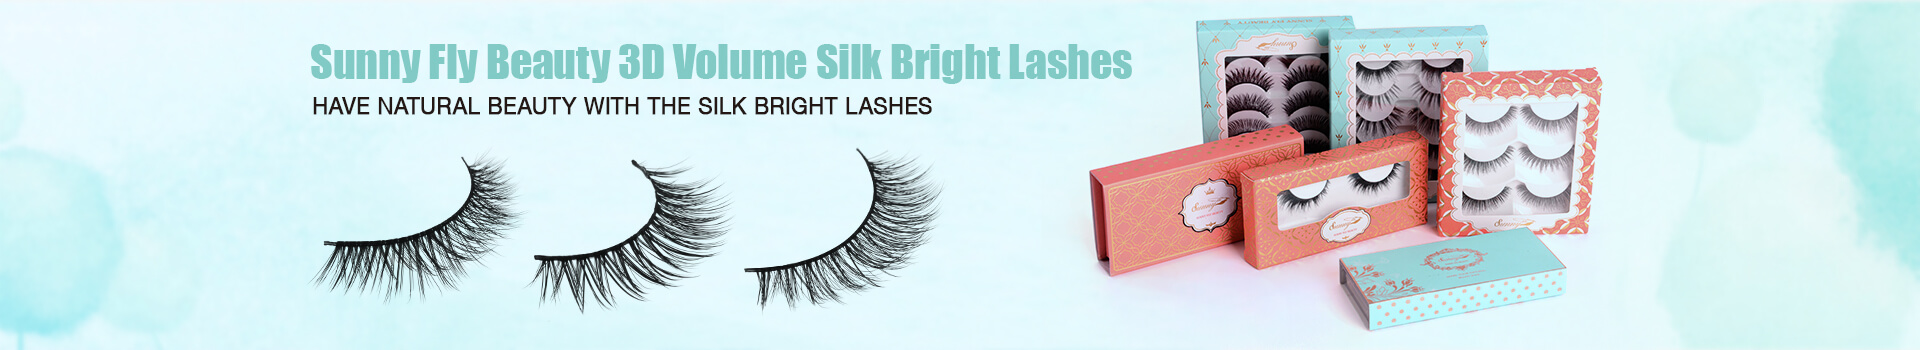 3D Volume Silk Bright Eyelashes FA09